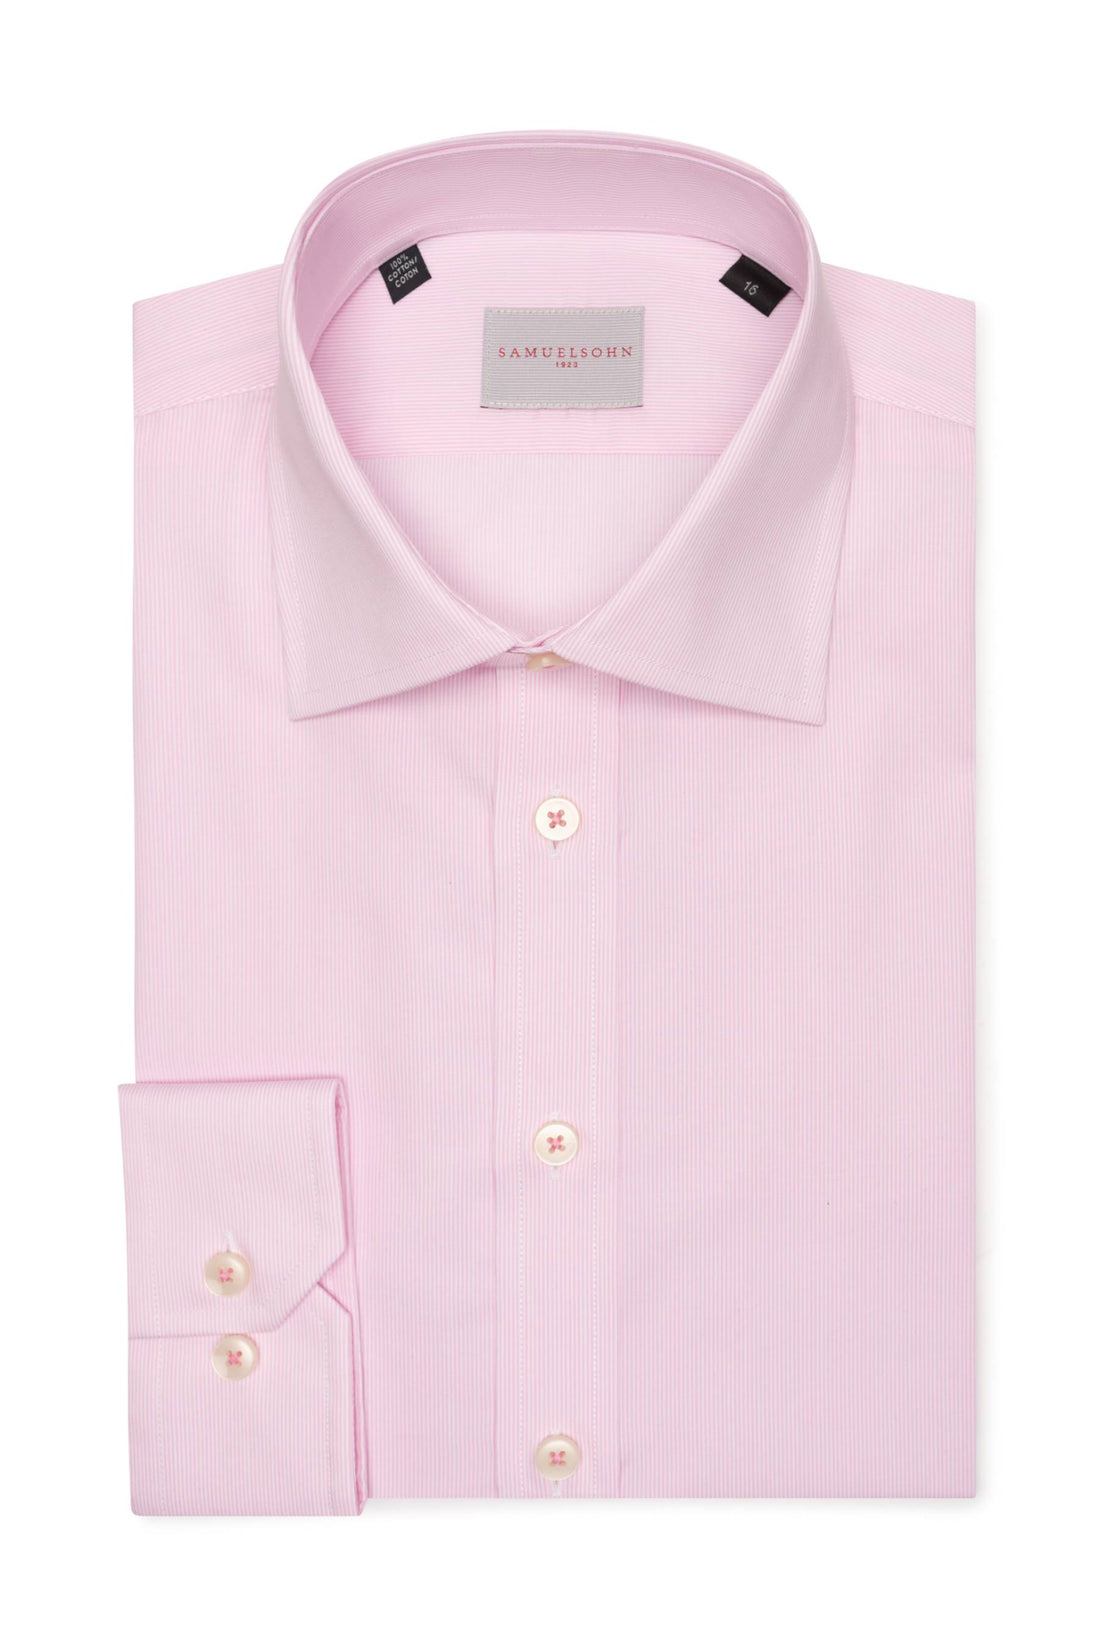 Samuelsohn Pink Stripe Contemporary Fit Easy Care Shirt